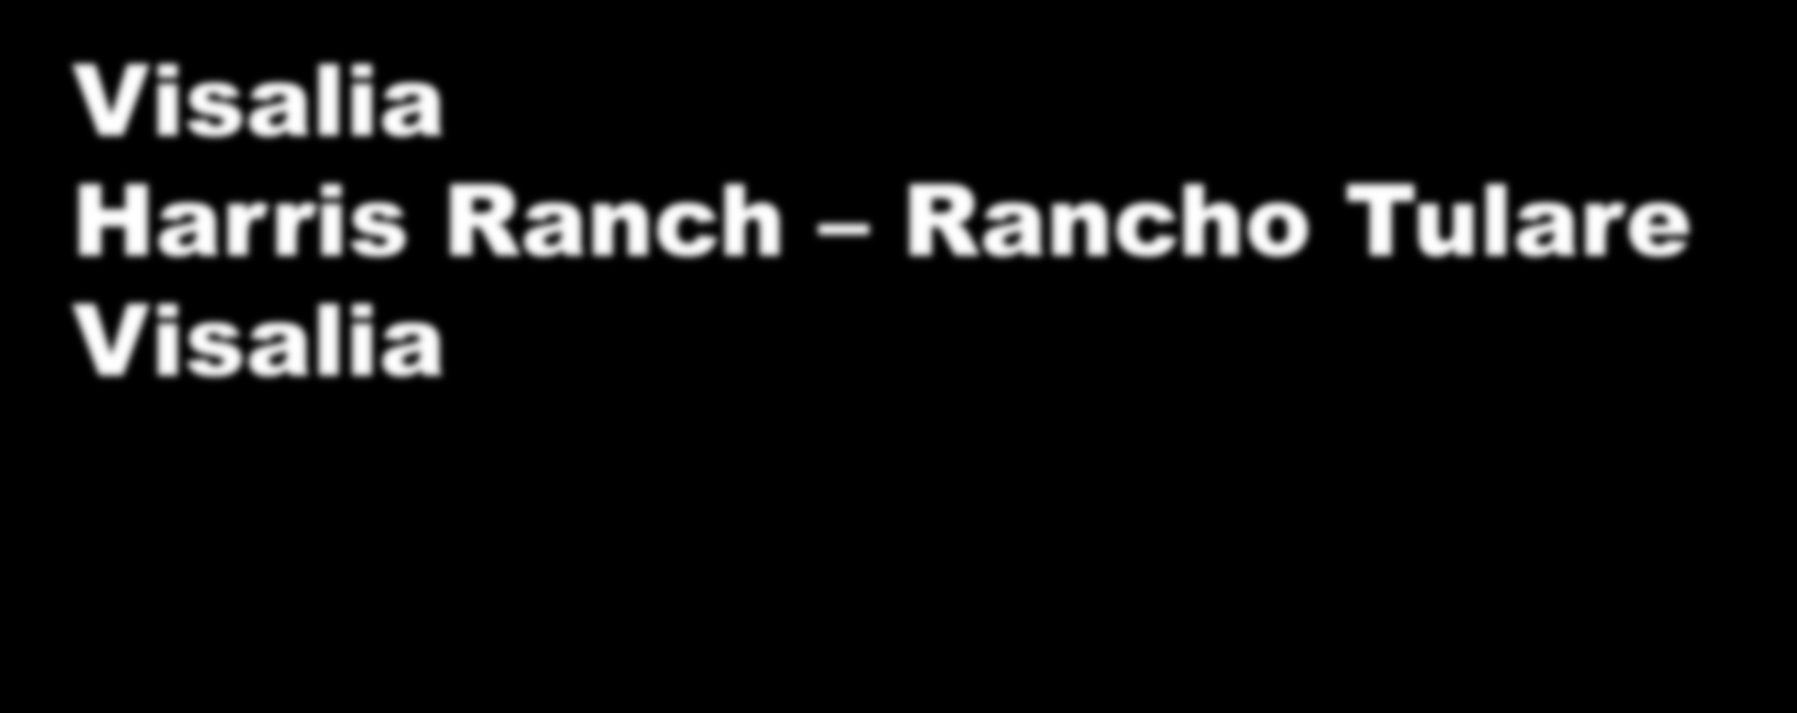 juni 05 2015 DAG 05 Visalia Harris Ranch Rancho